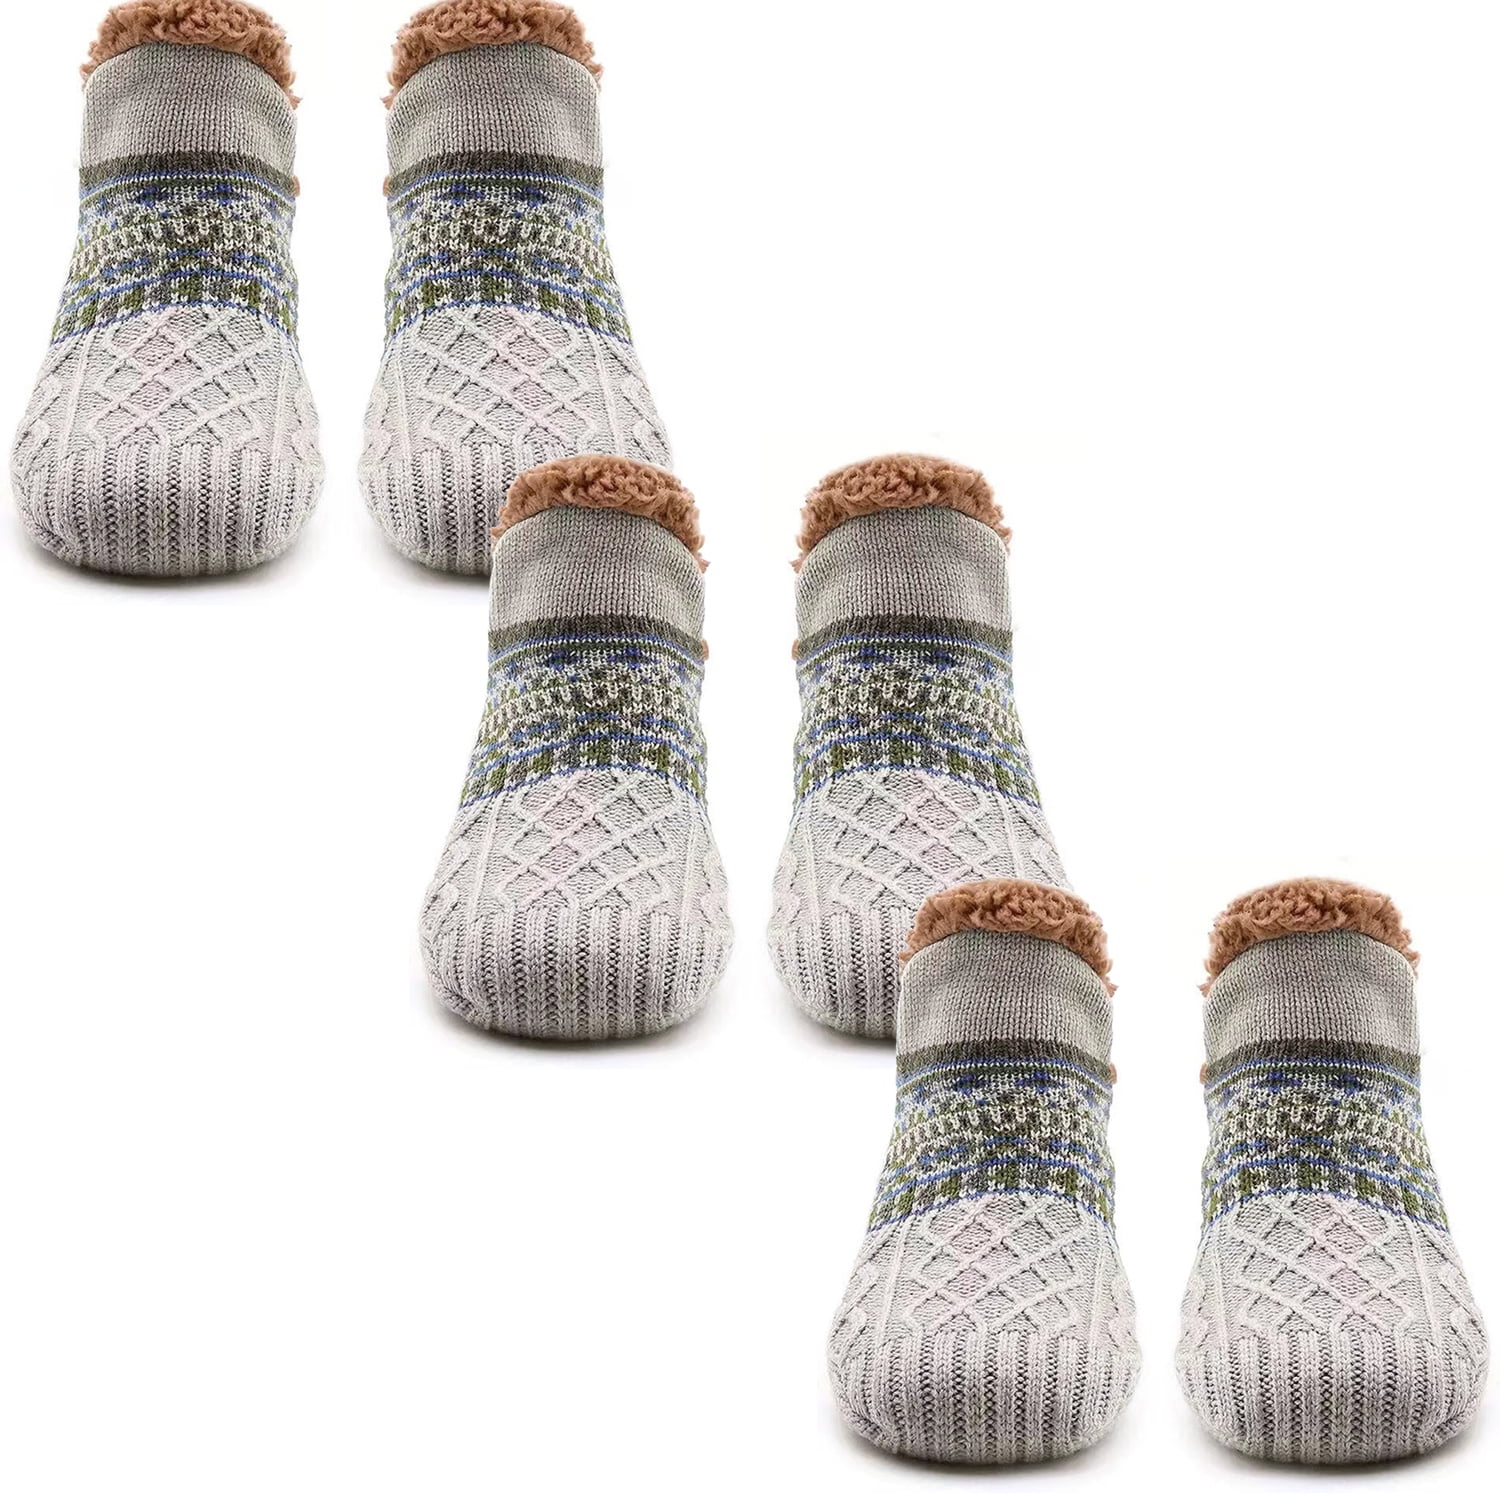  FALKE Men's Lodge Homepad Slipper Socks, Cozy Warm